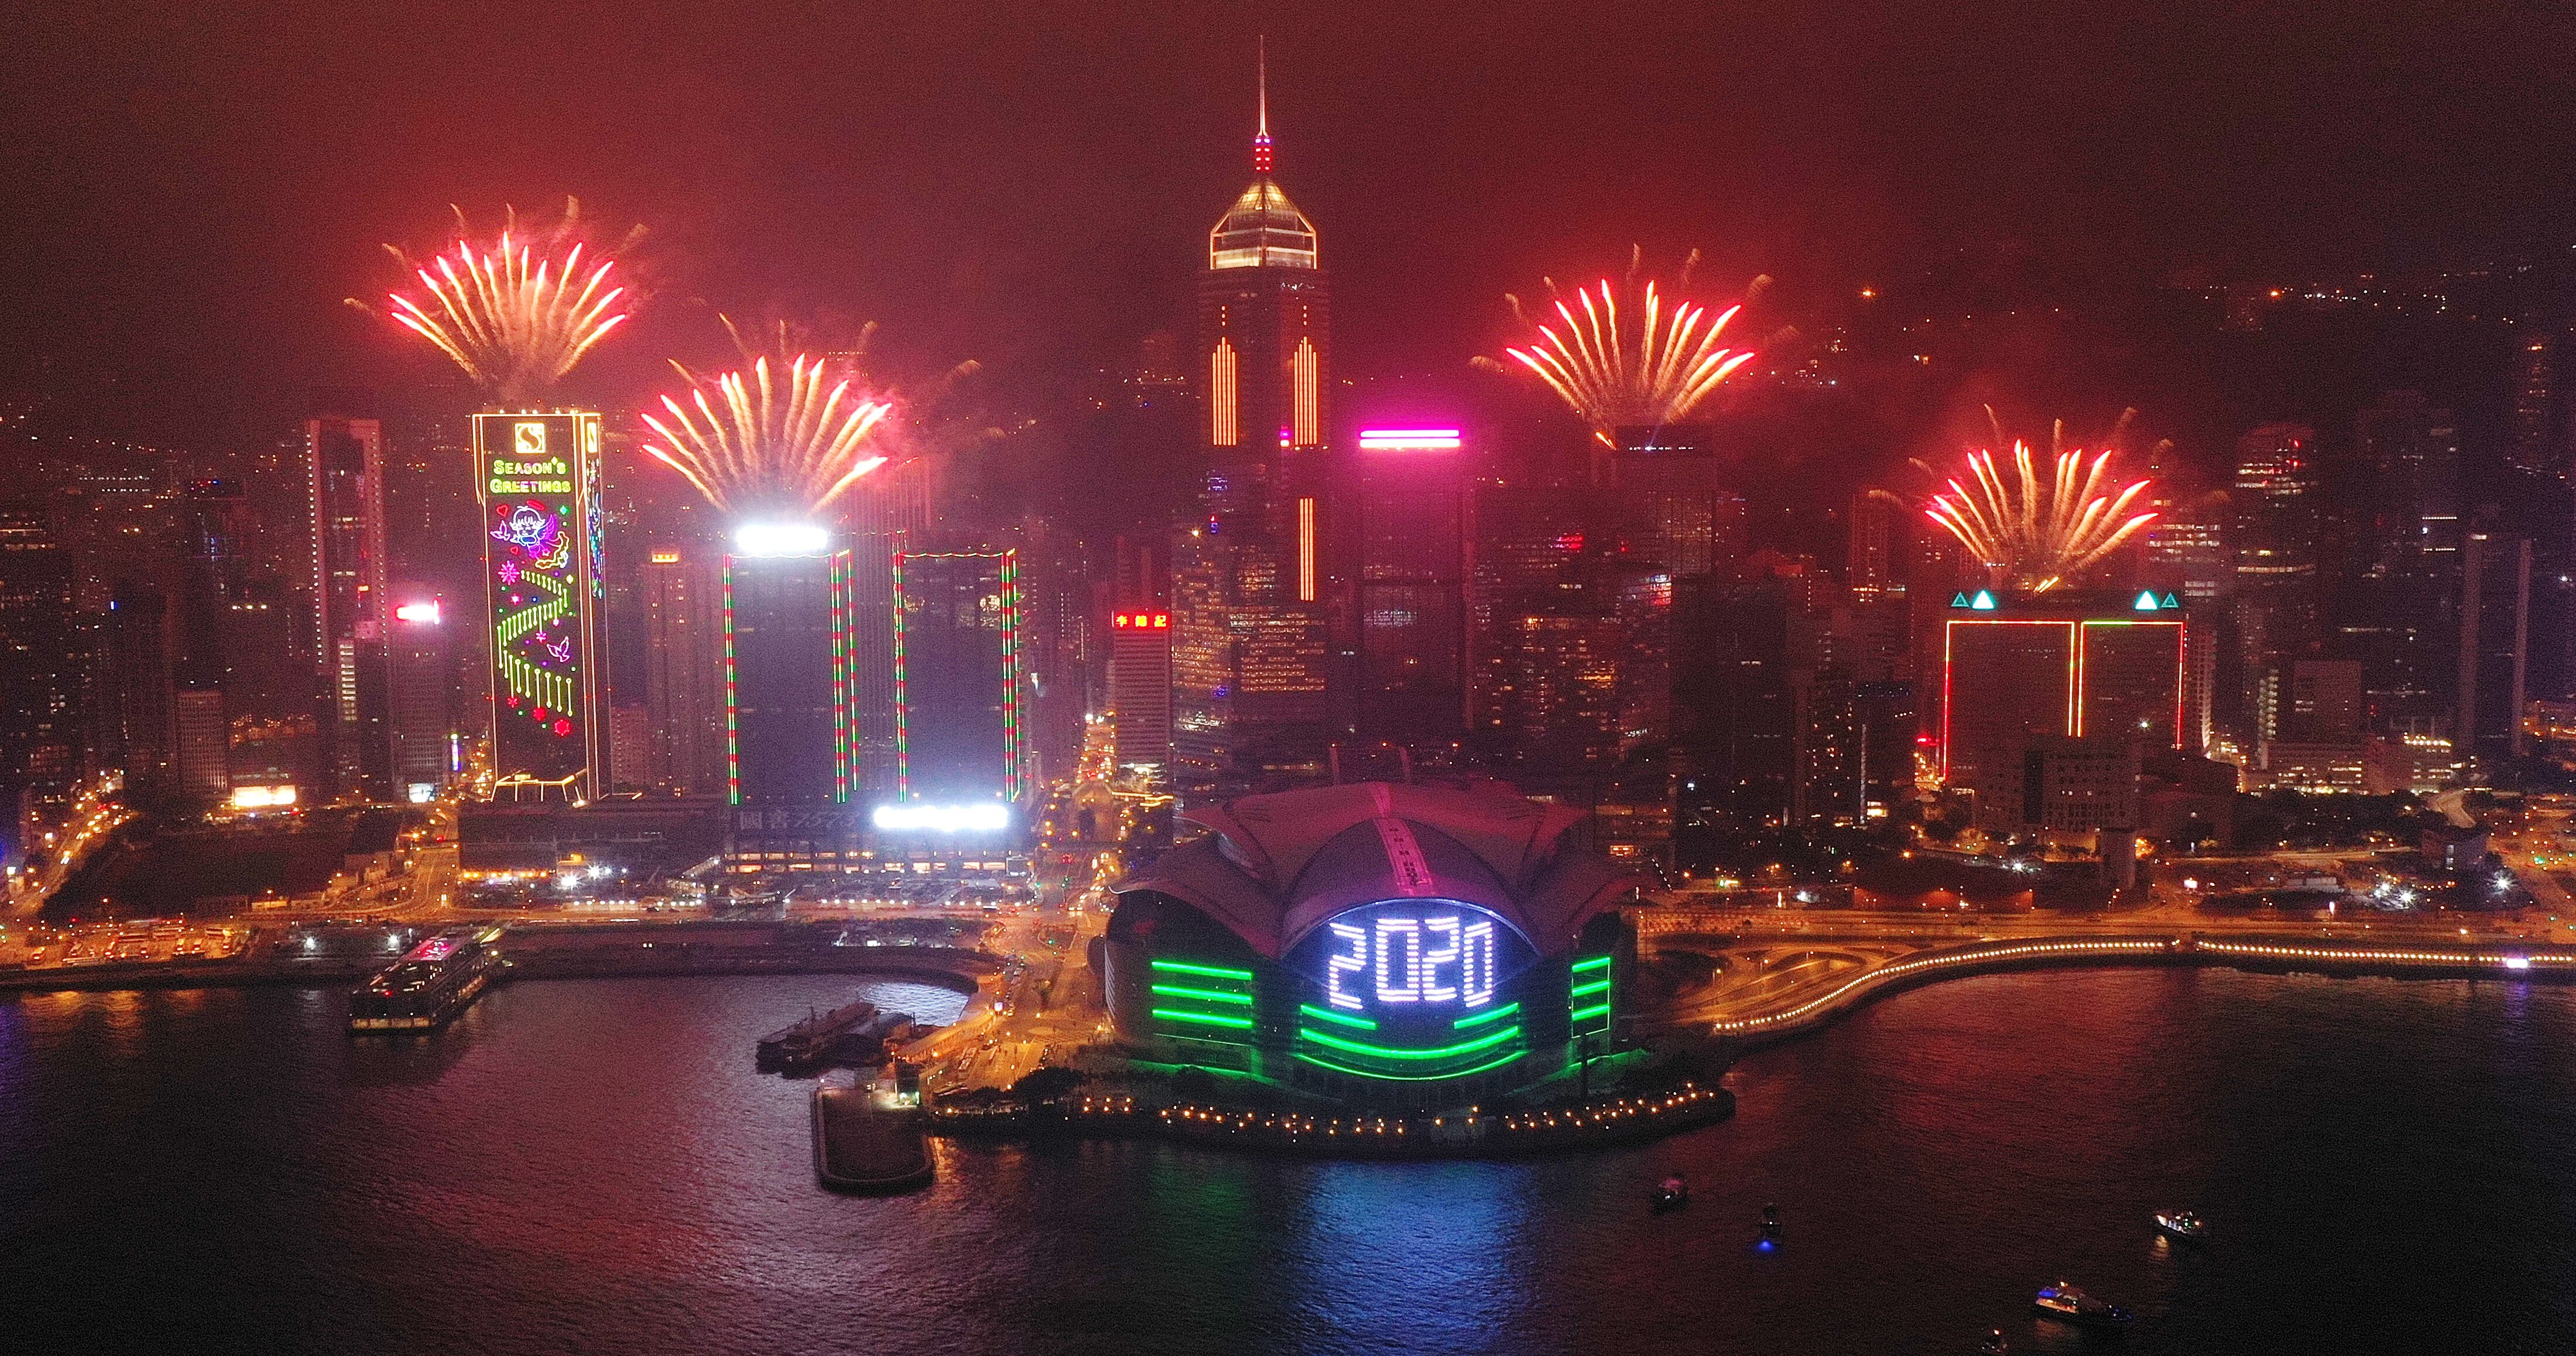 Hong Kong Chinese New Year Firework Performance